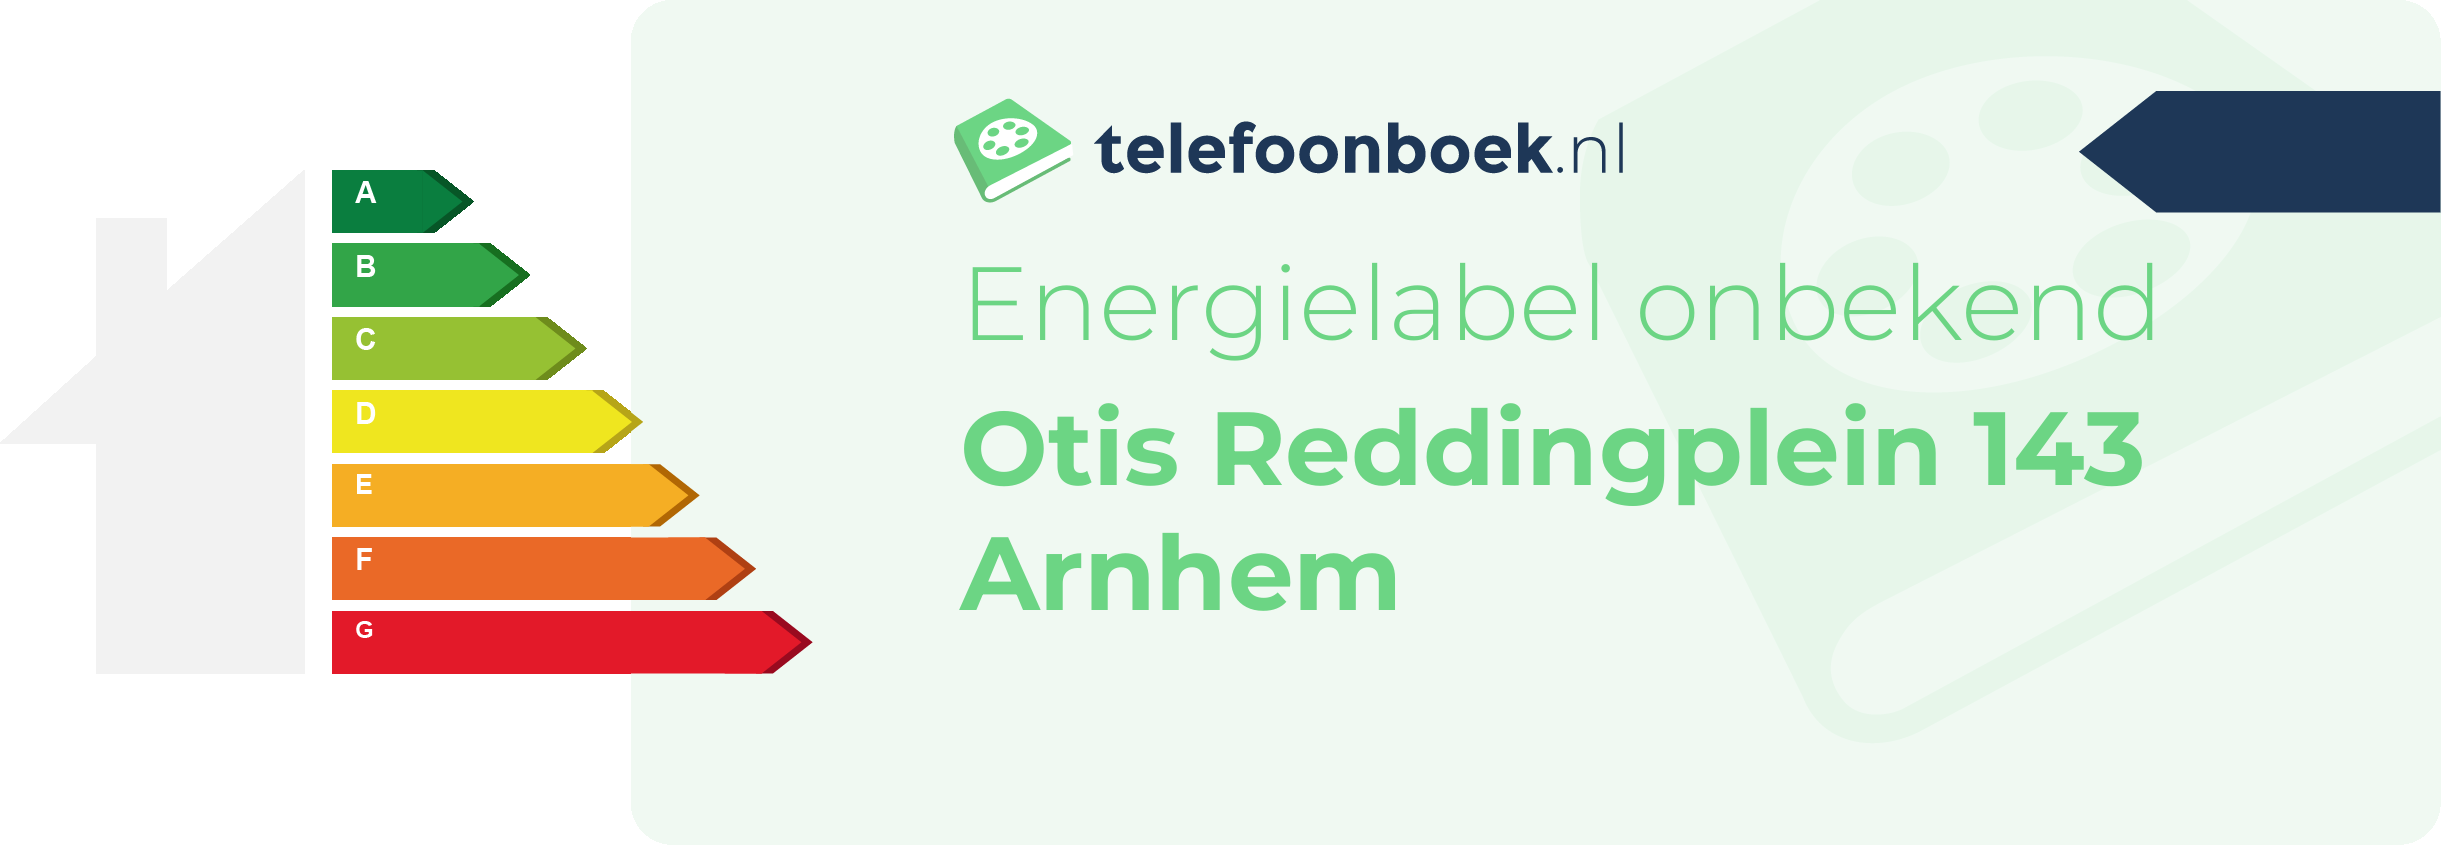 Energielabel Otis Reddingplein 143 Arnhem